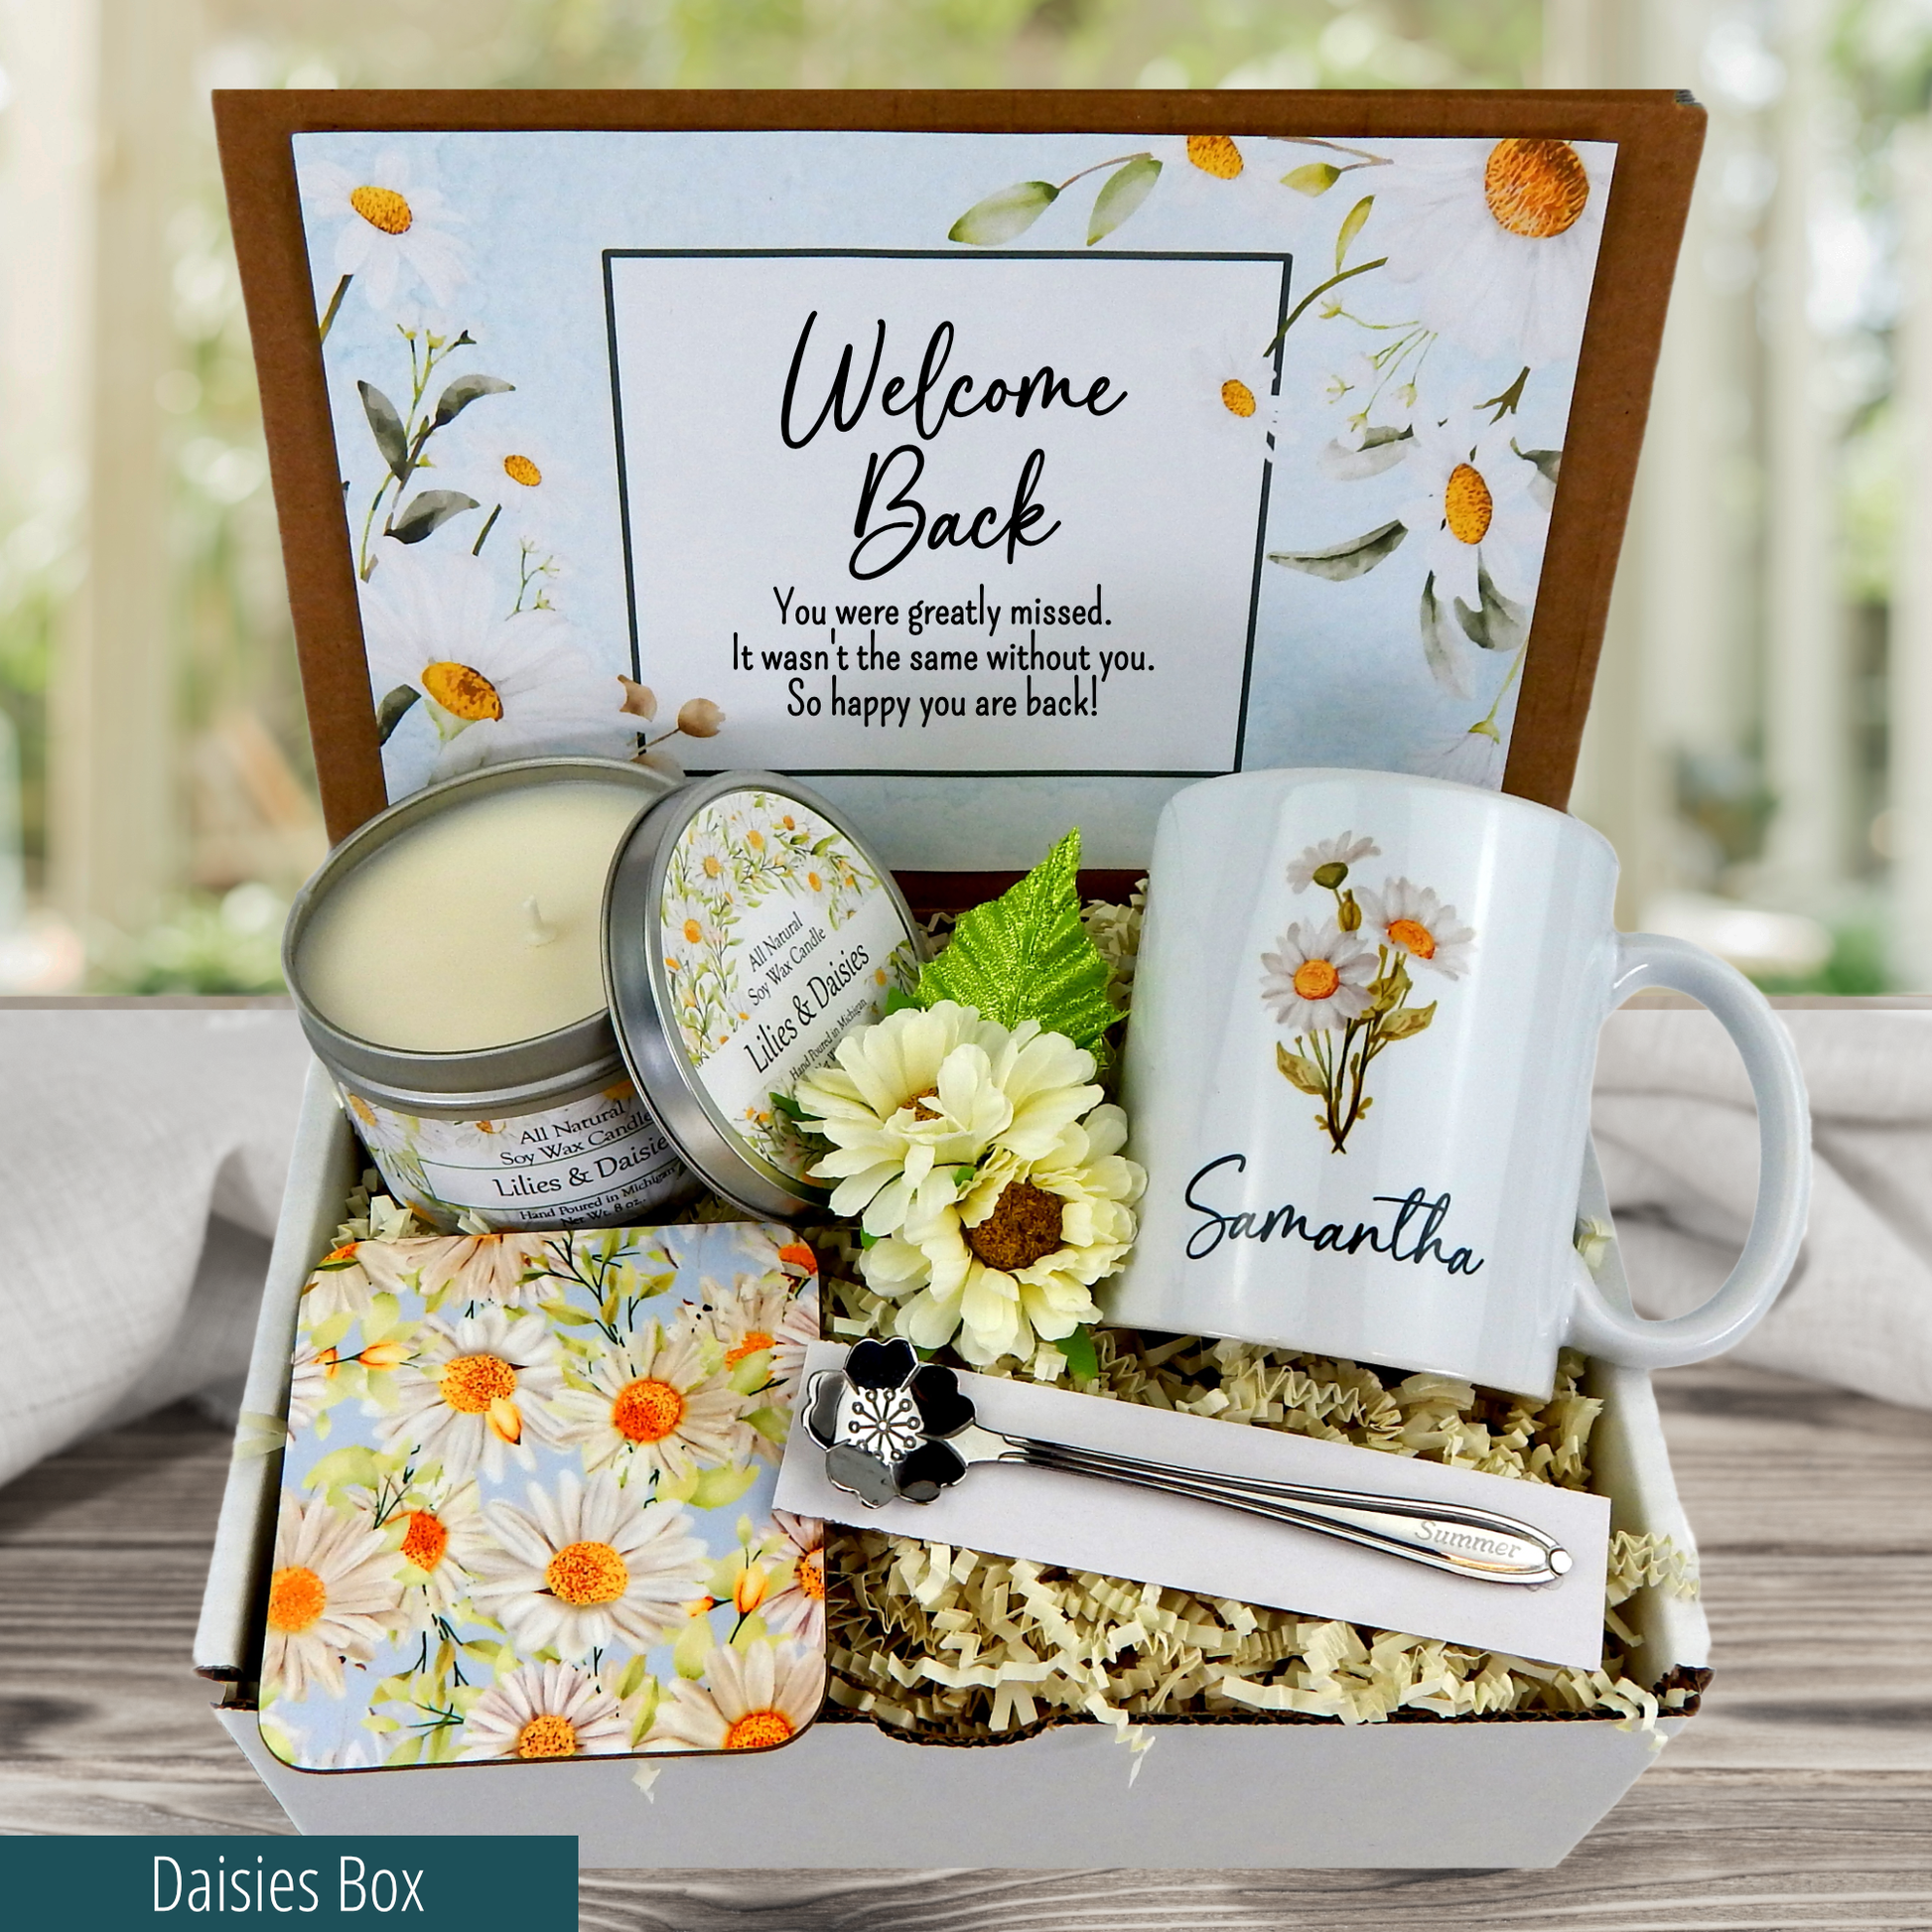 Special keepsake: personalized mug and warm welcome